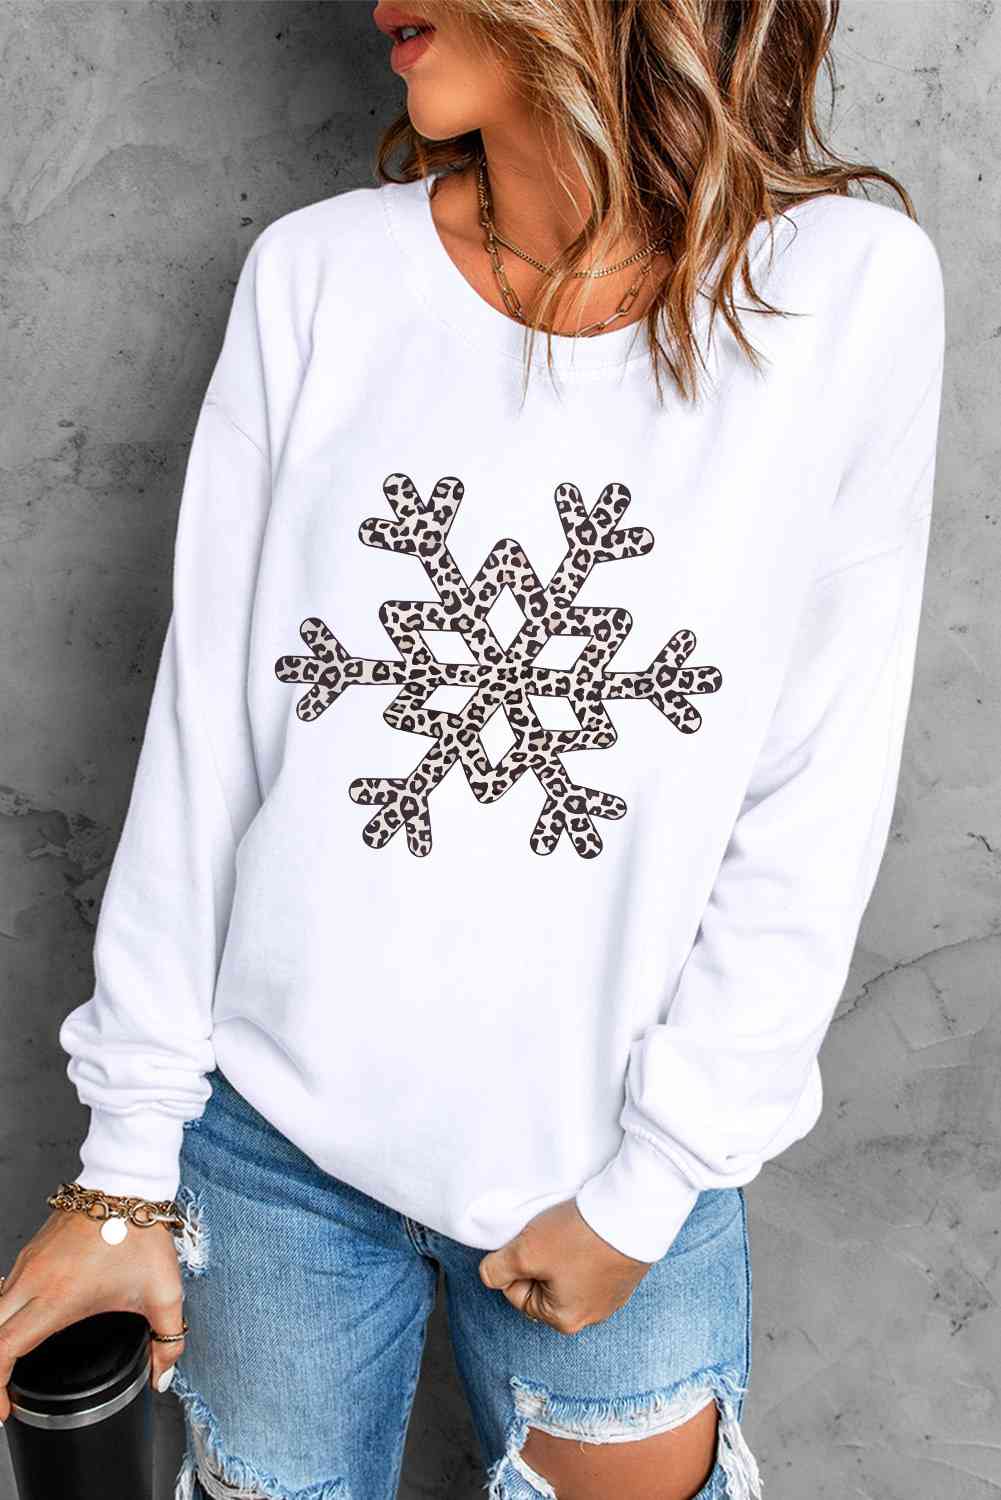 Snowflake Graphic Dropped Shoulder Sweatshirt